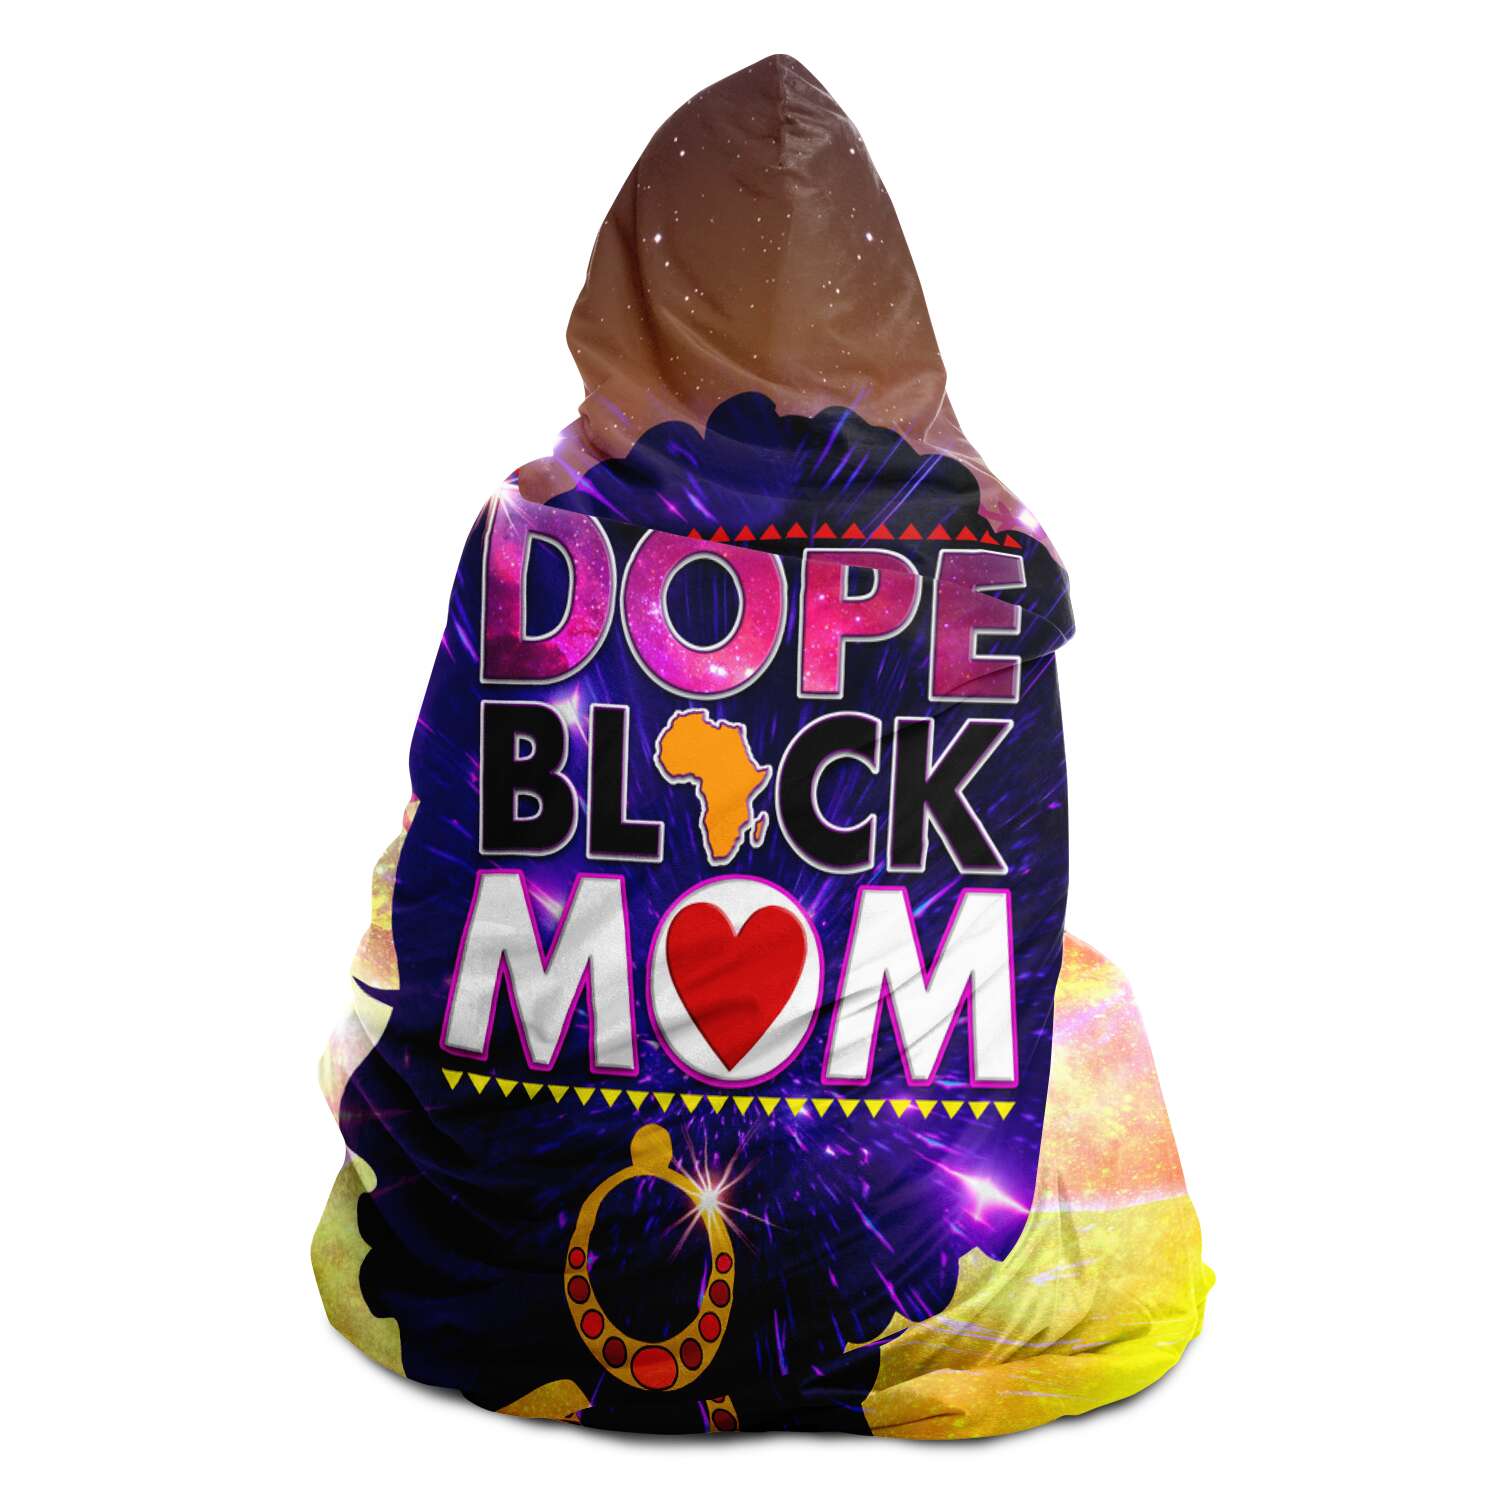 Dope Black Mom of Son Hooded Blanket